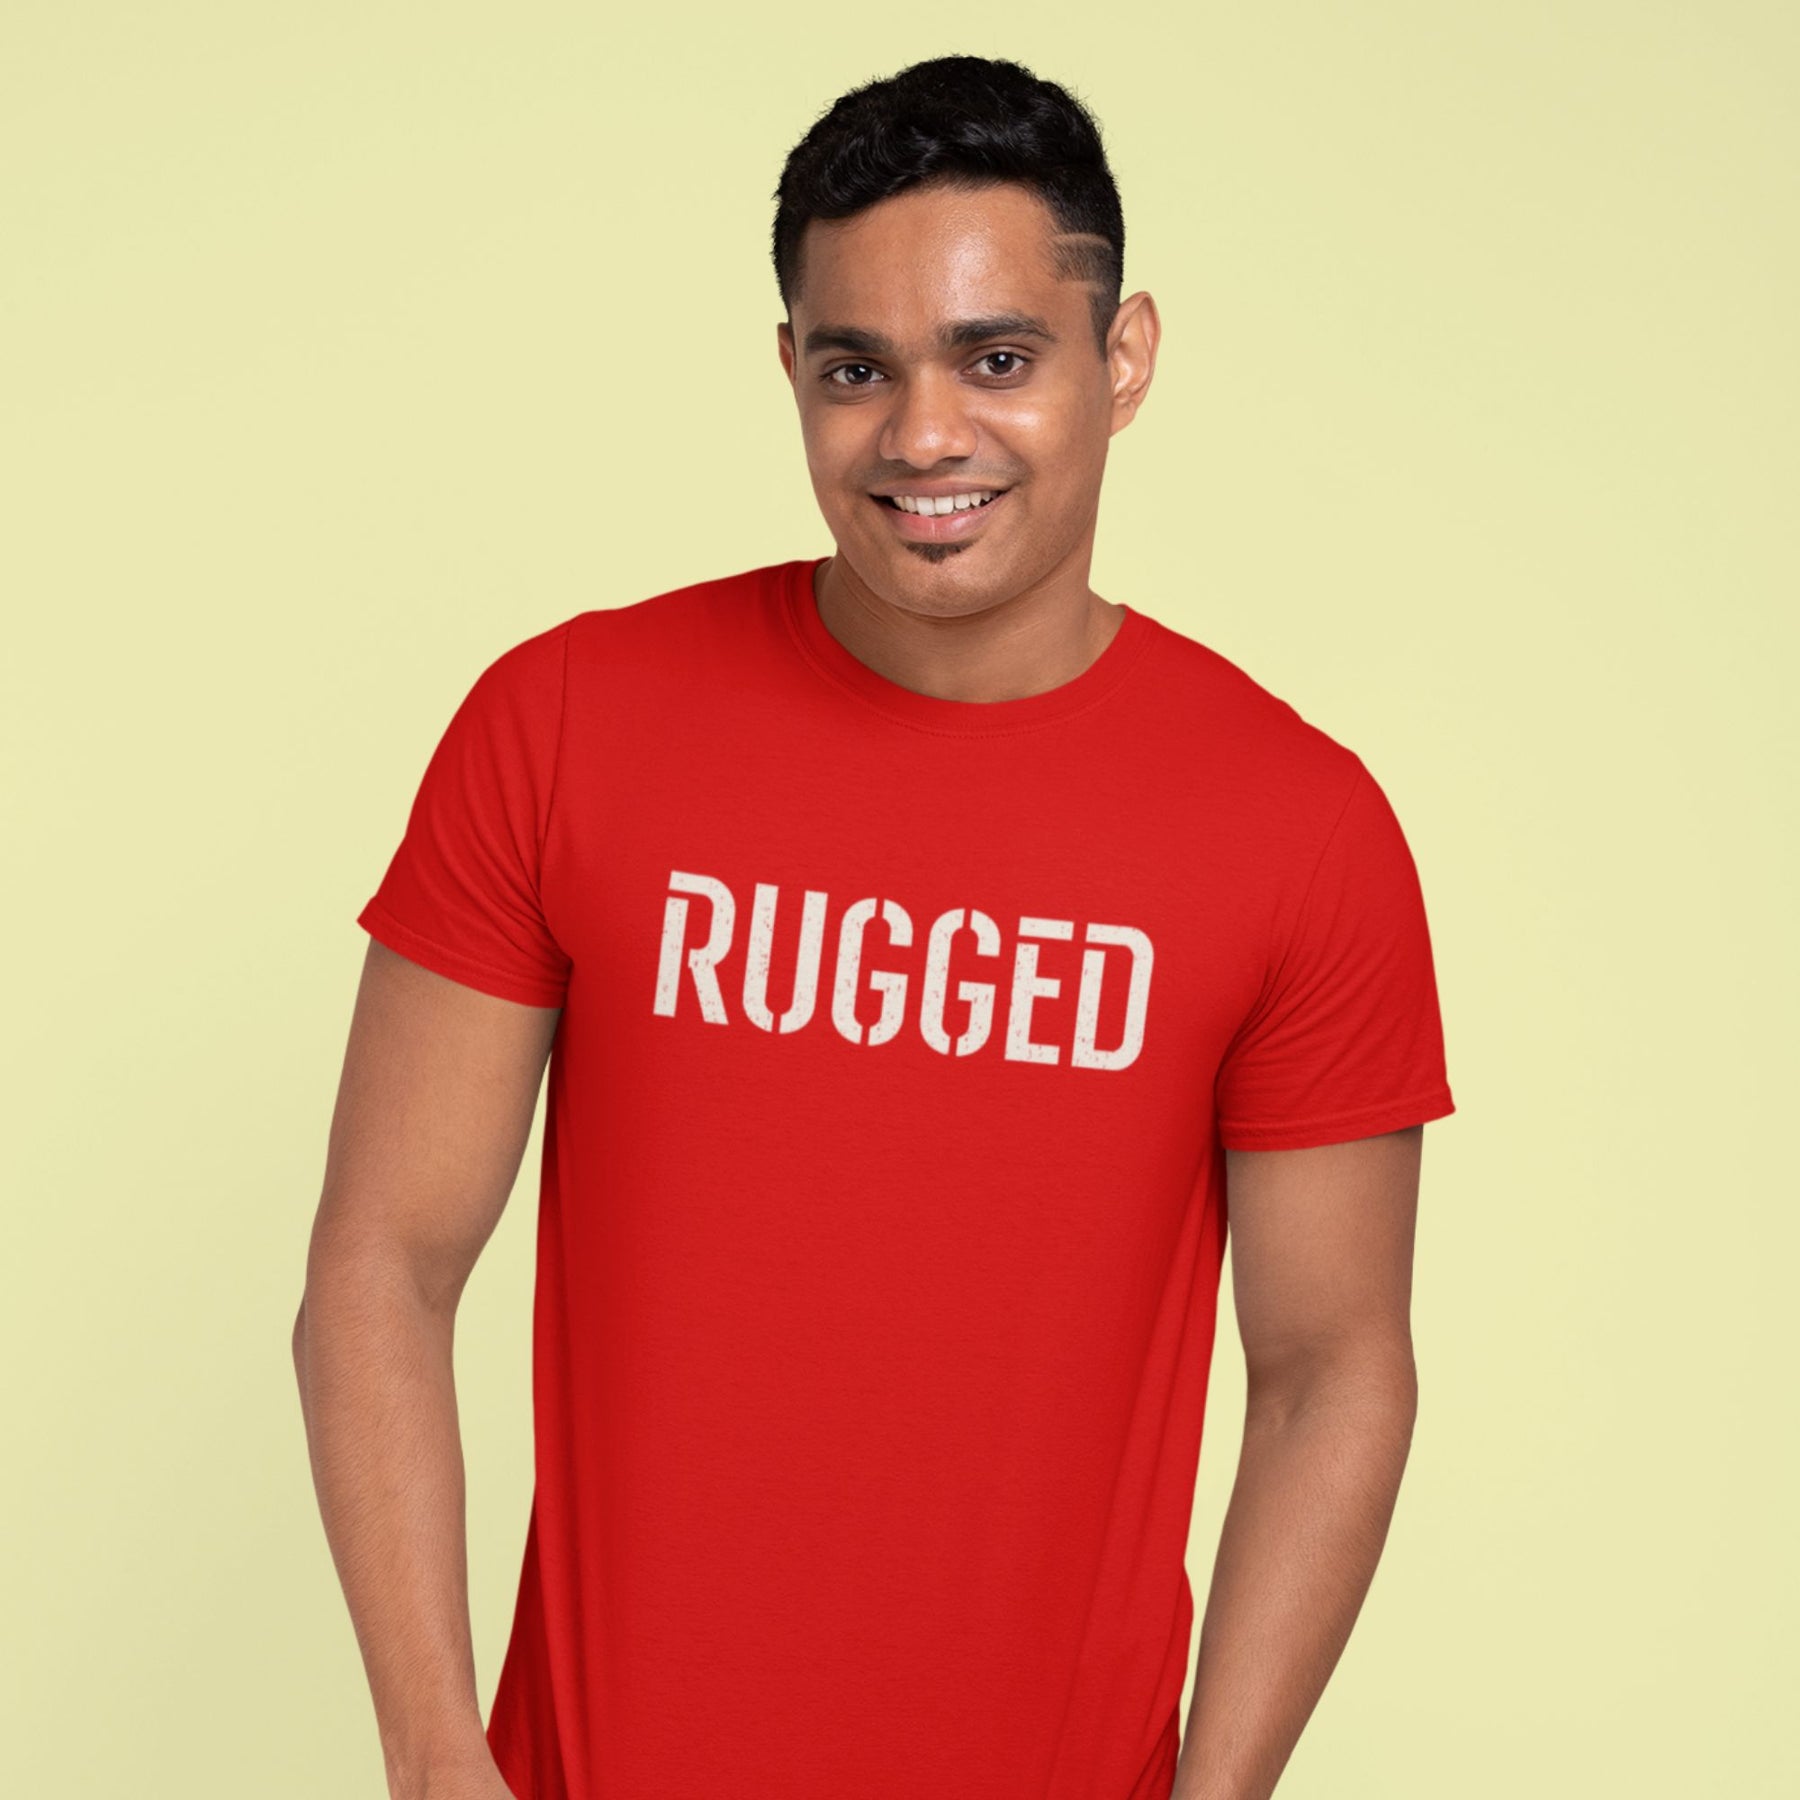 Rugged Men's Typography T-shirt